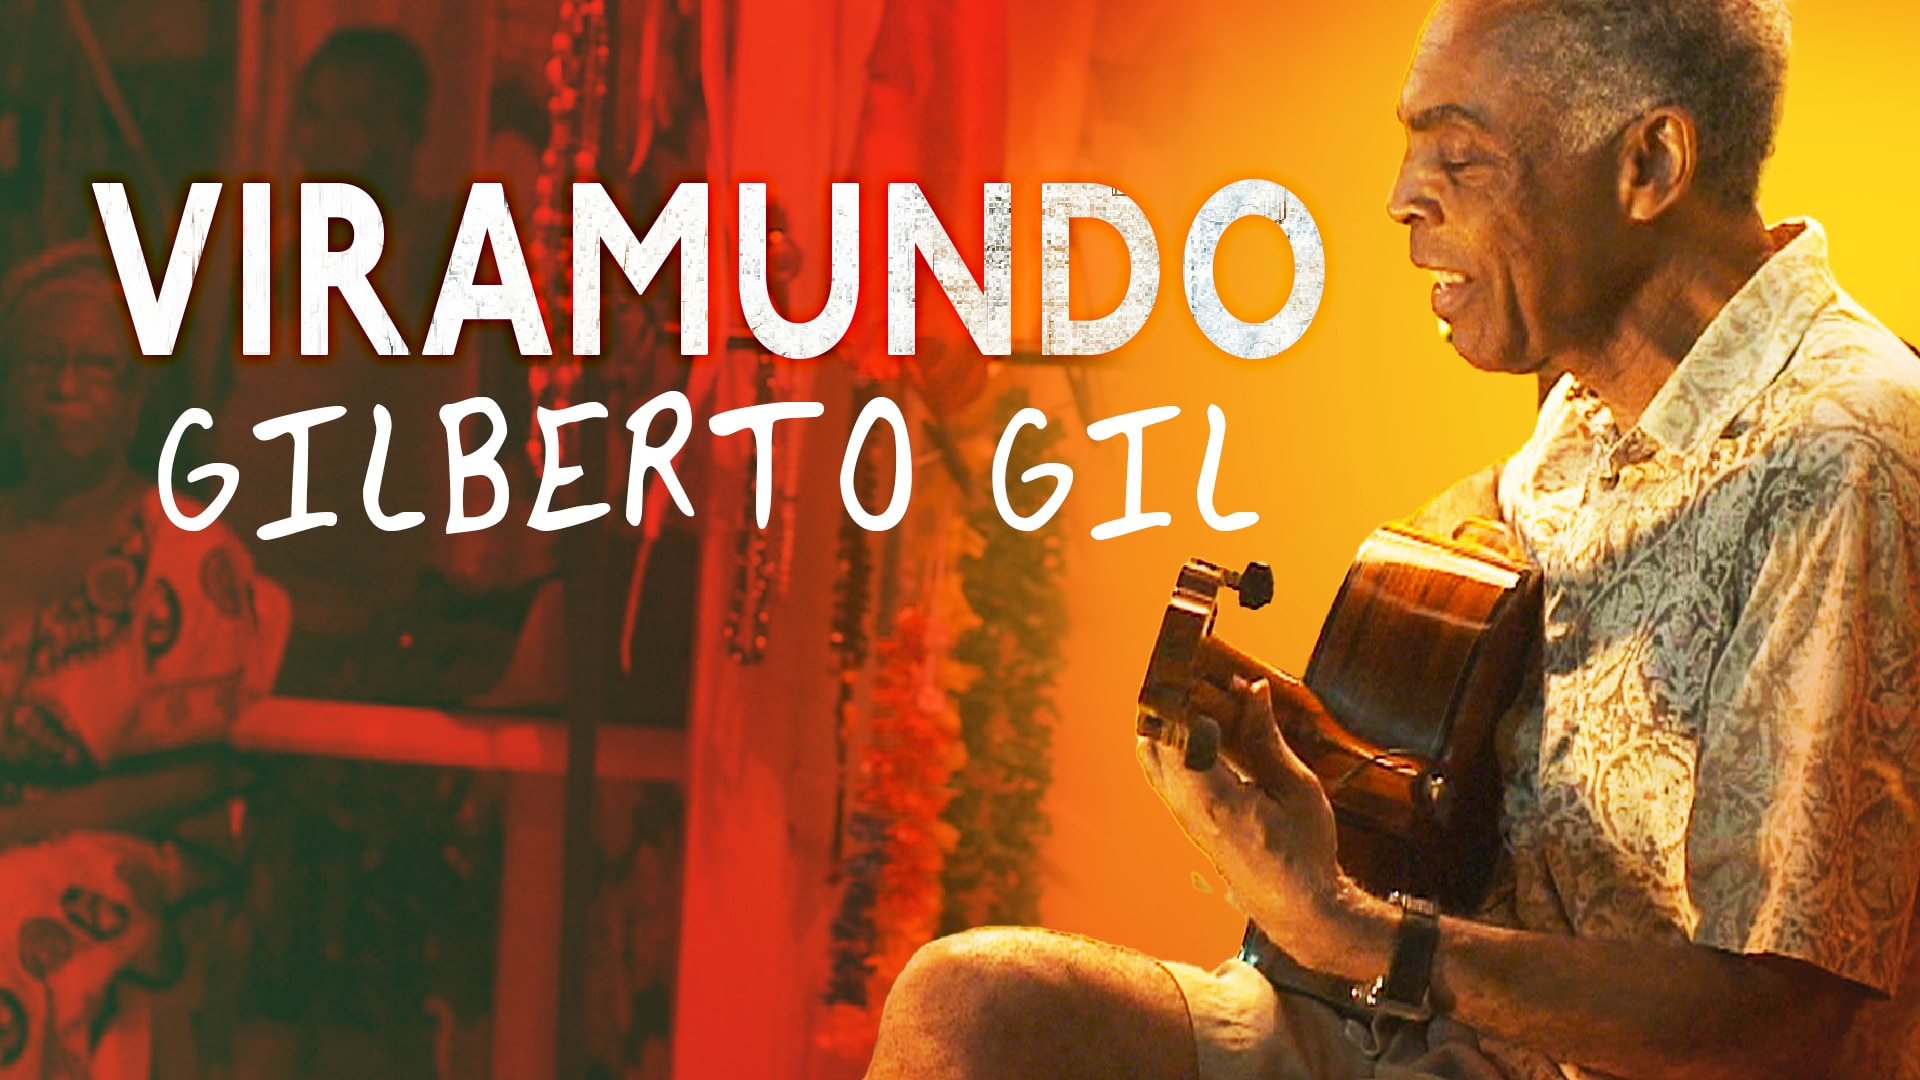 Viramundo: Gilberto Gil